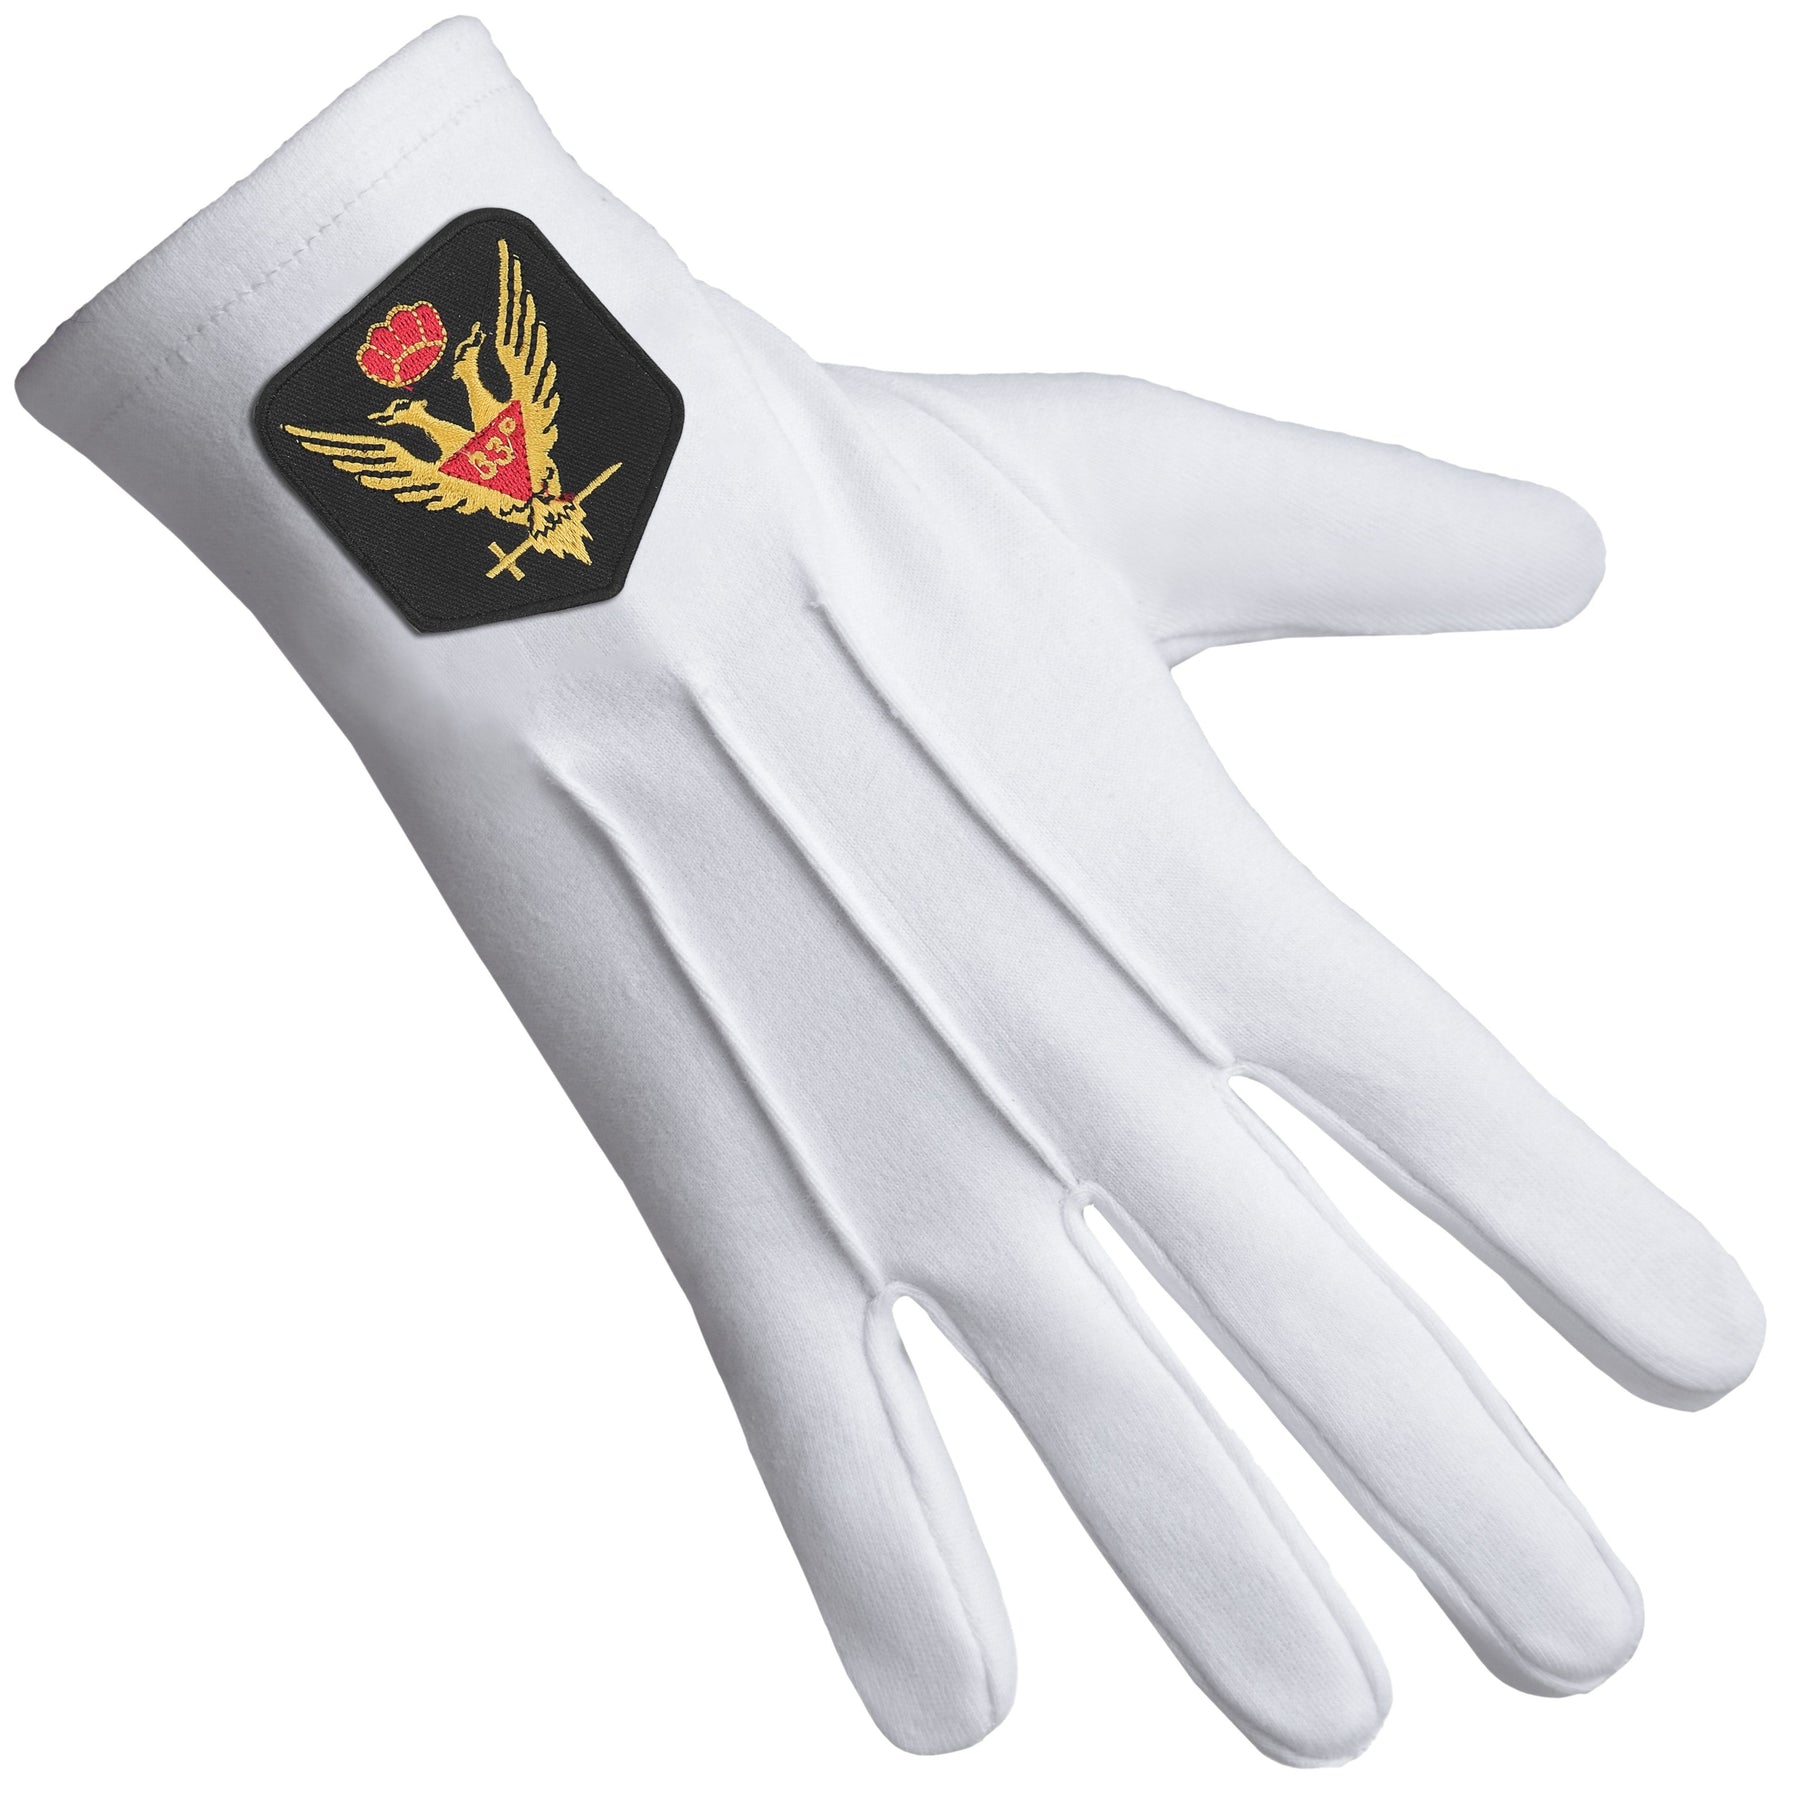 33rd Degree Scottish Rite Glove - White Cotton With Gold Emblem - Bricks Masons